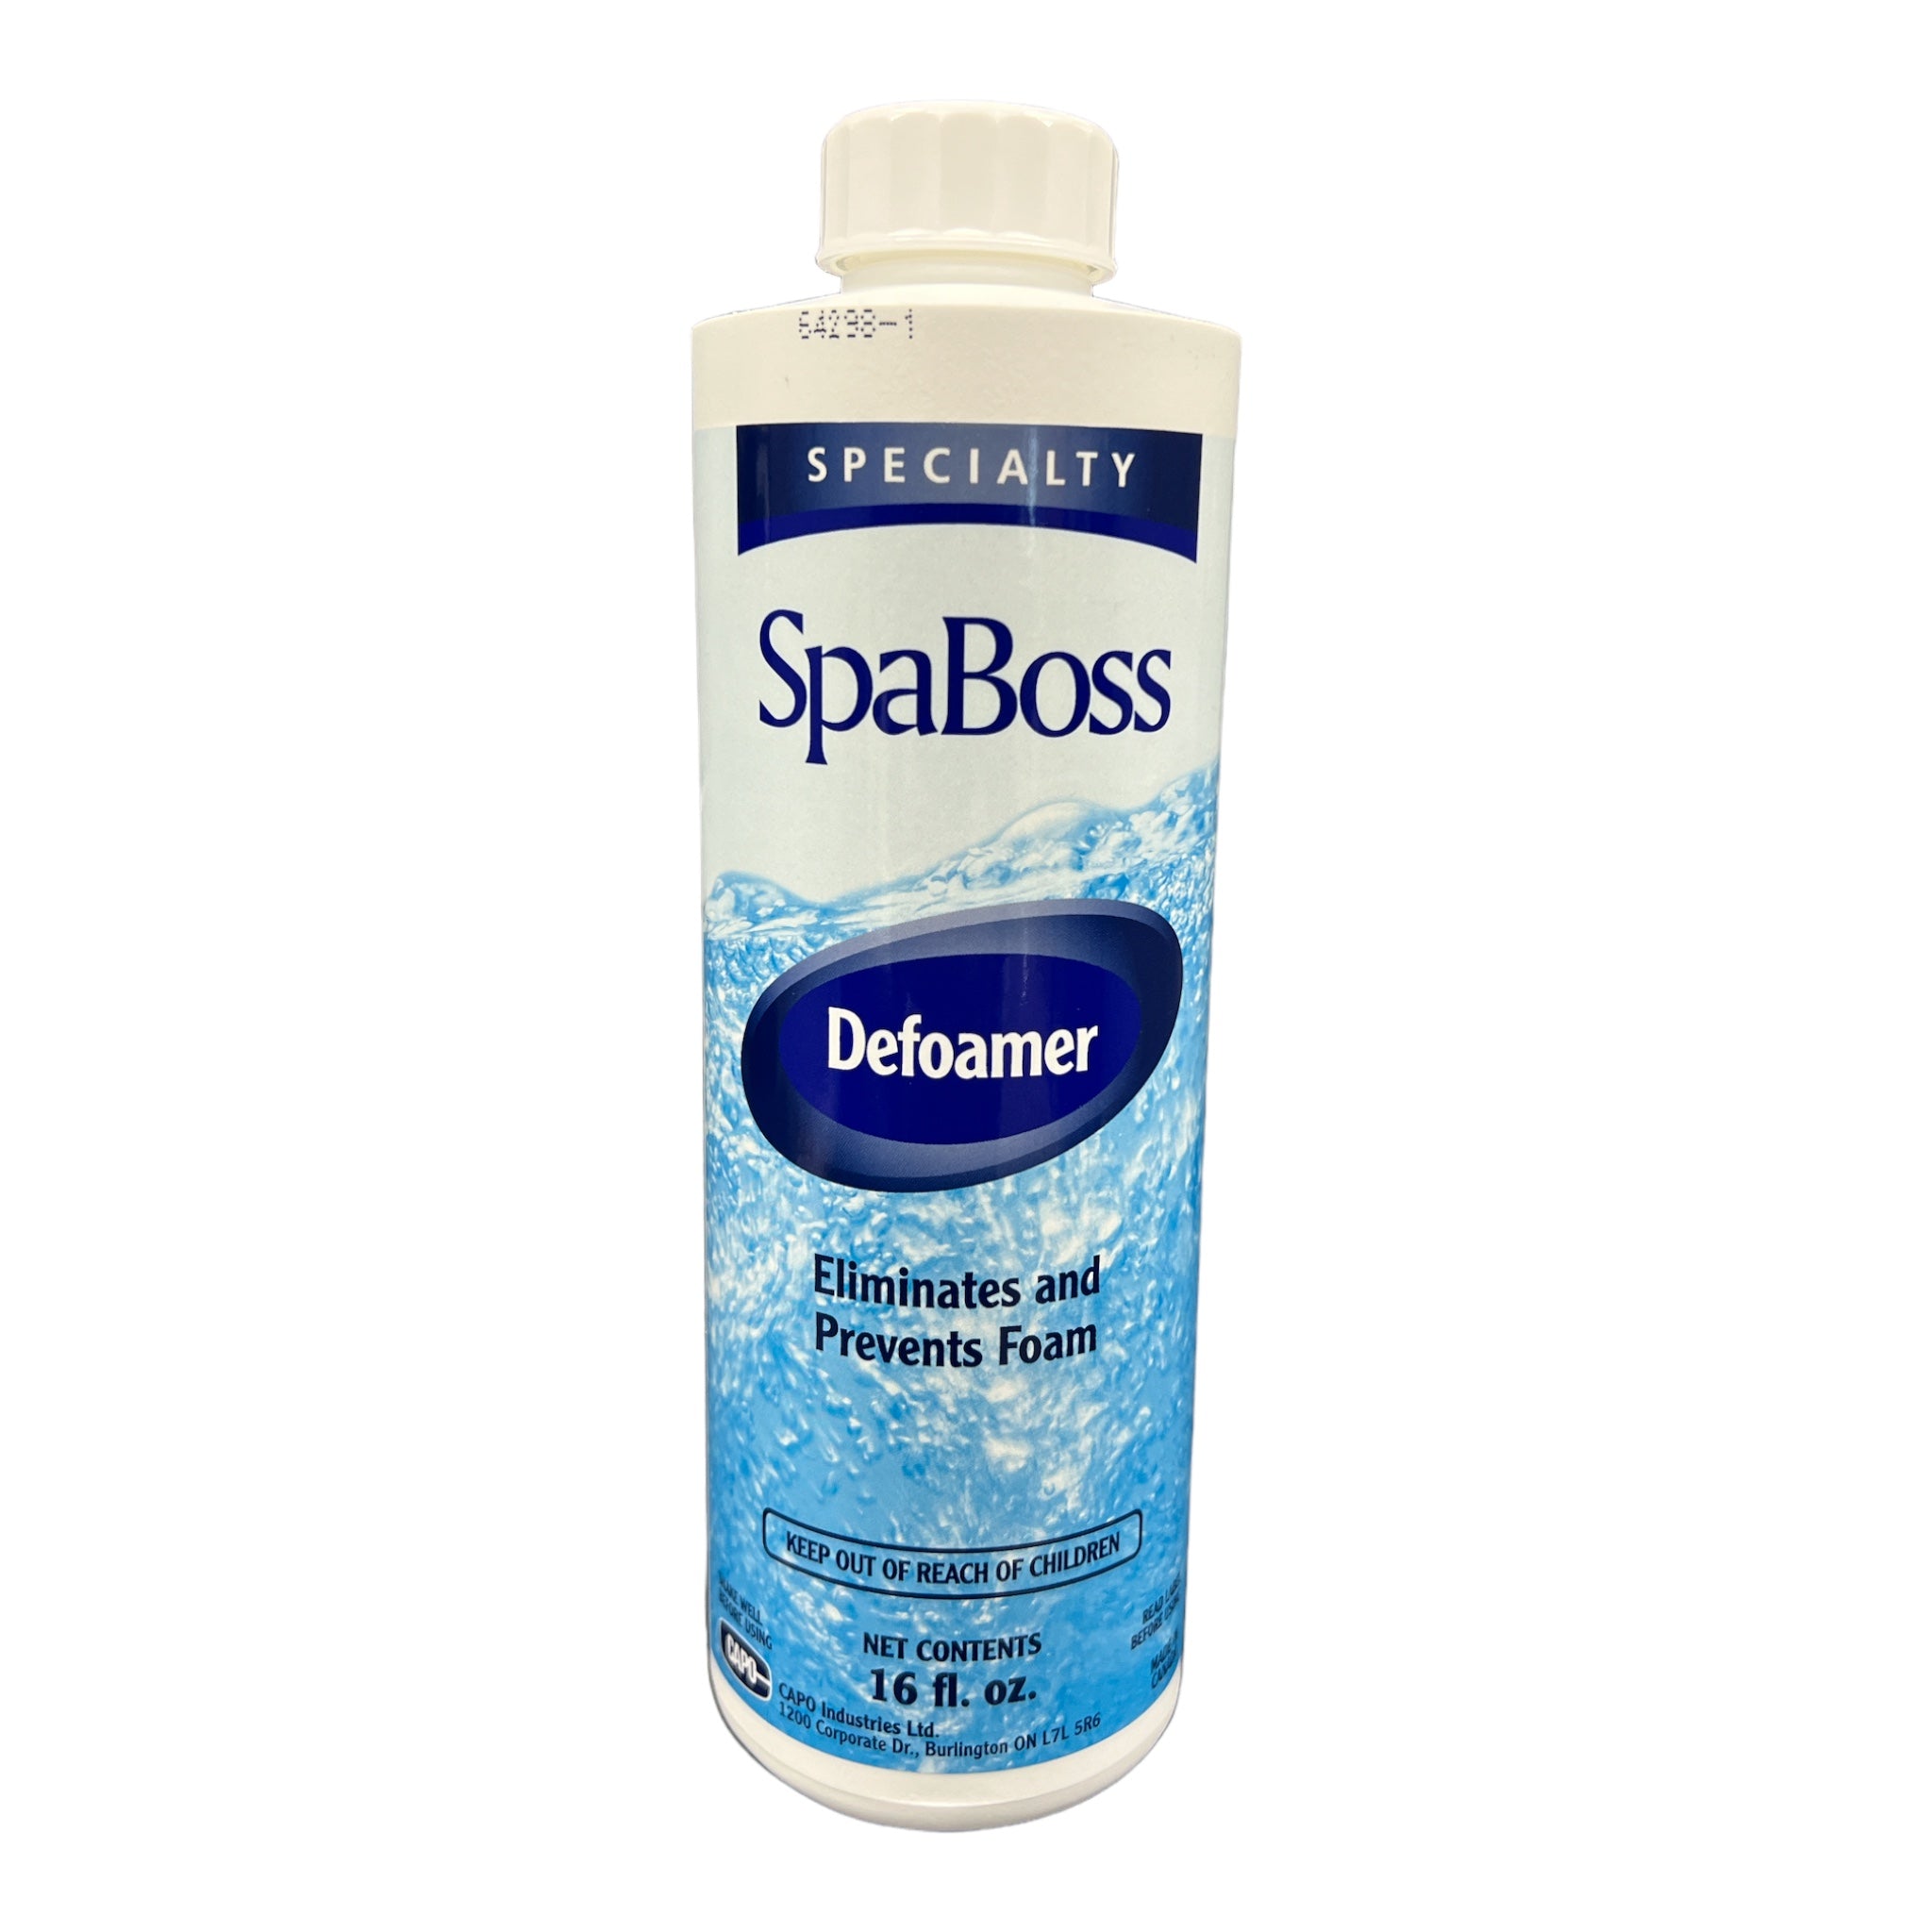 SpaBoss Defoamer